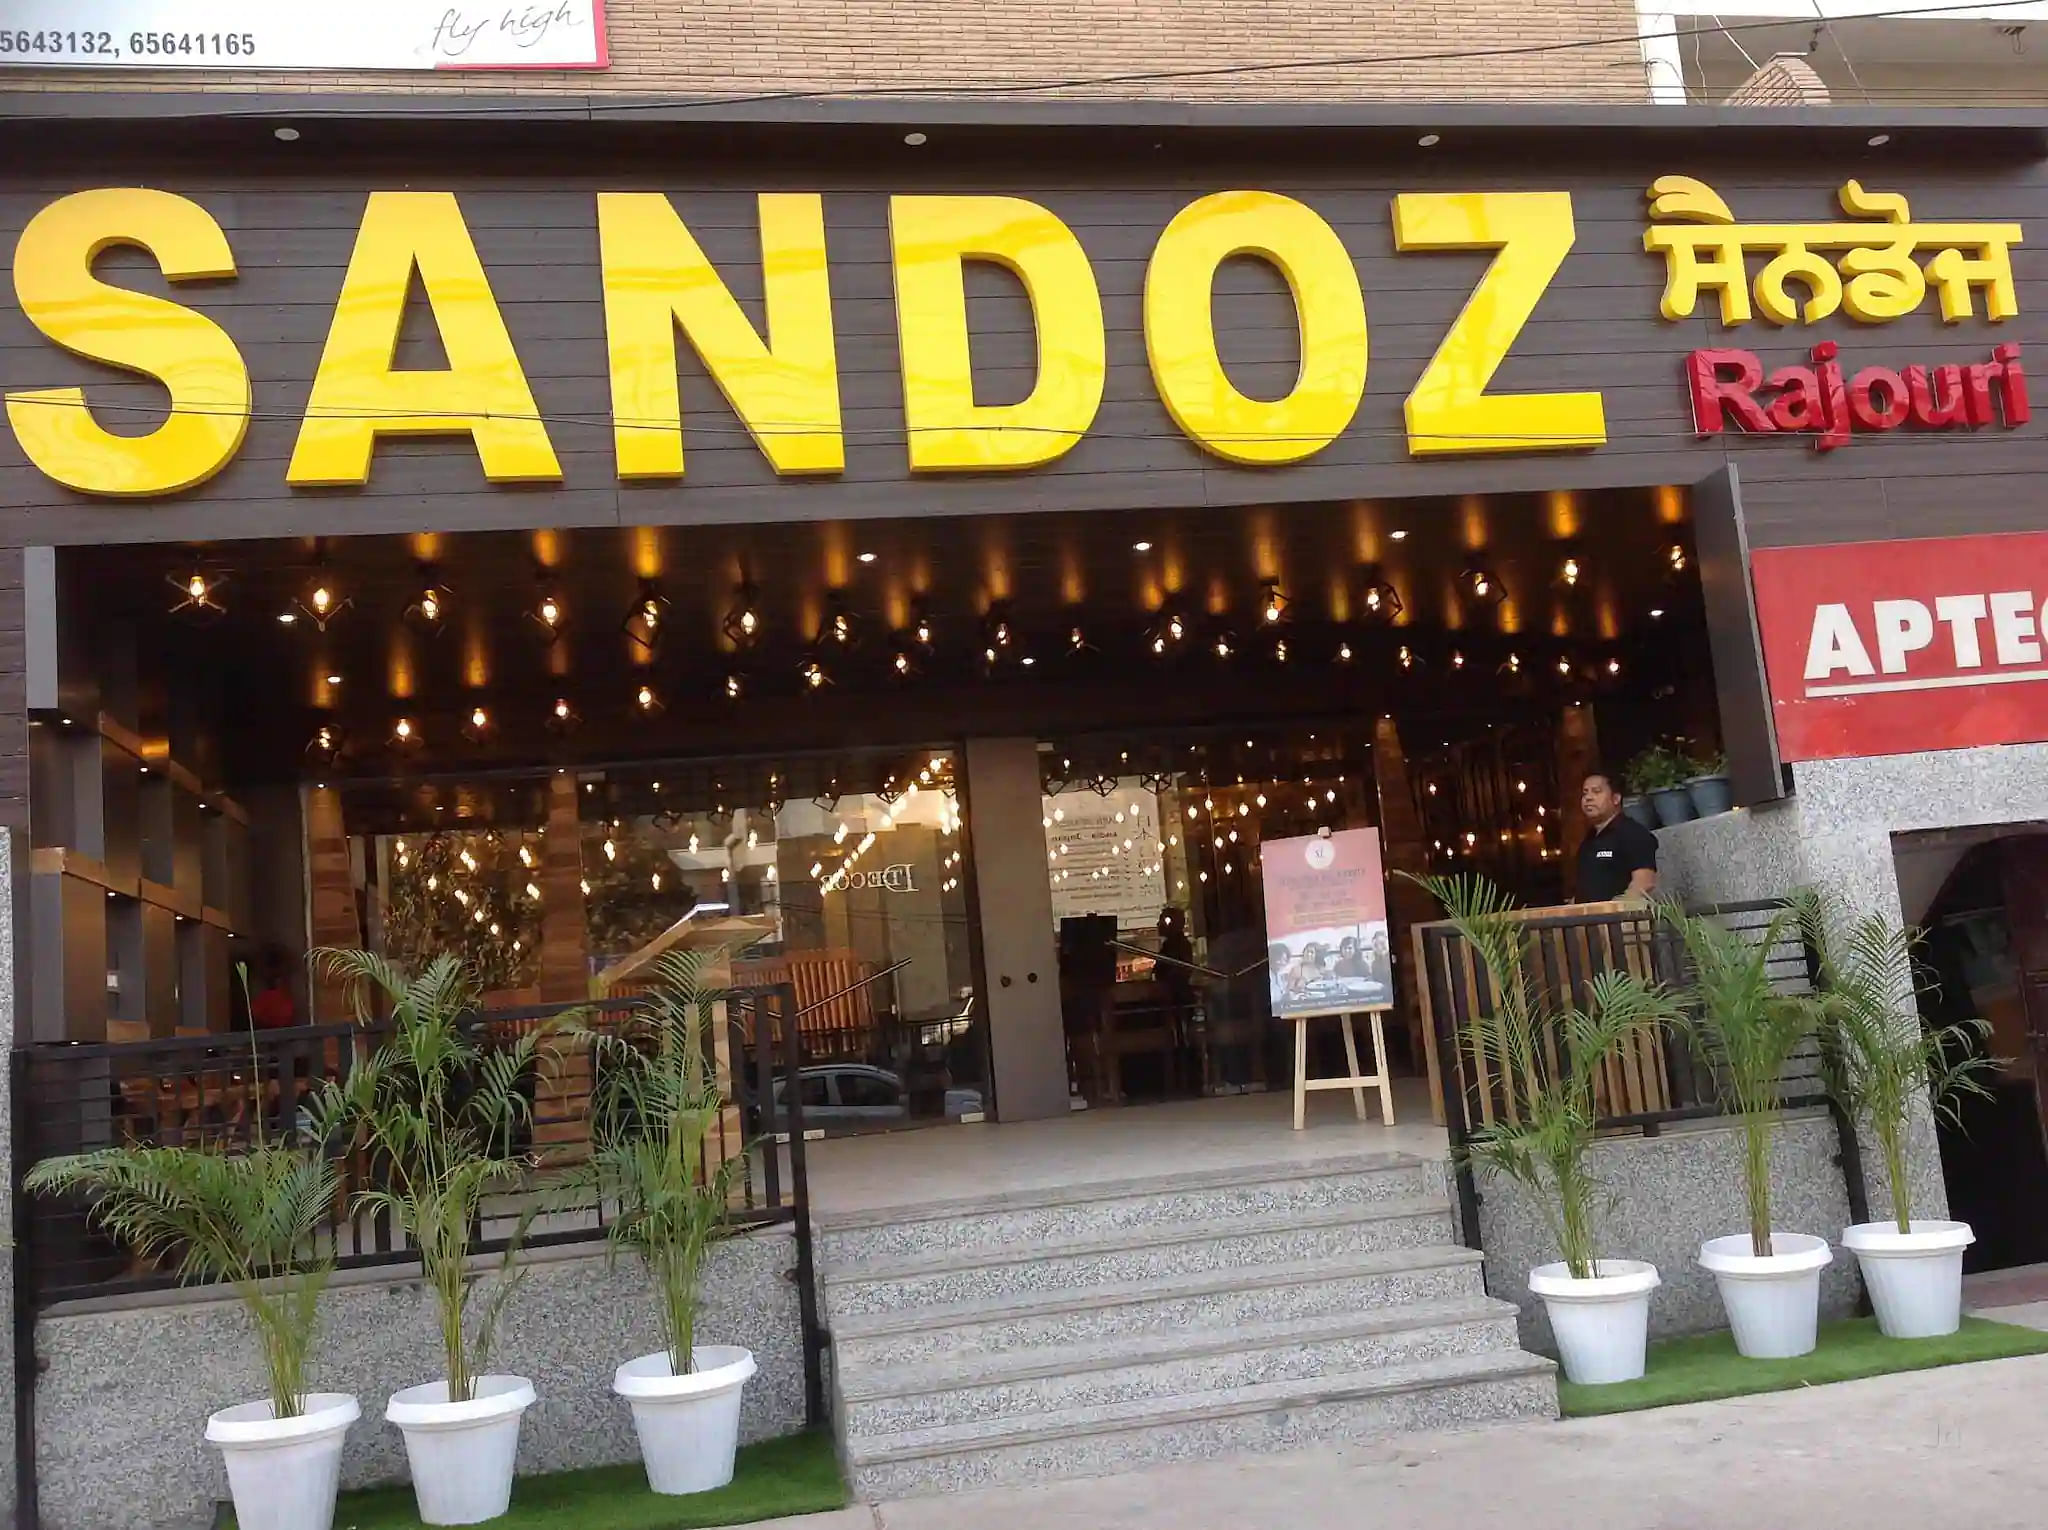 Sandoz in Rajouri Garden, Delhi